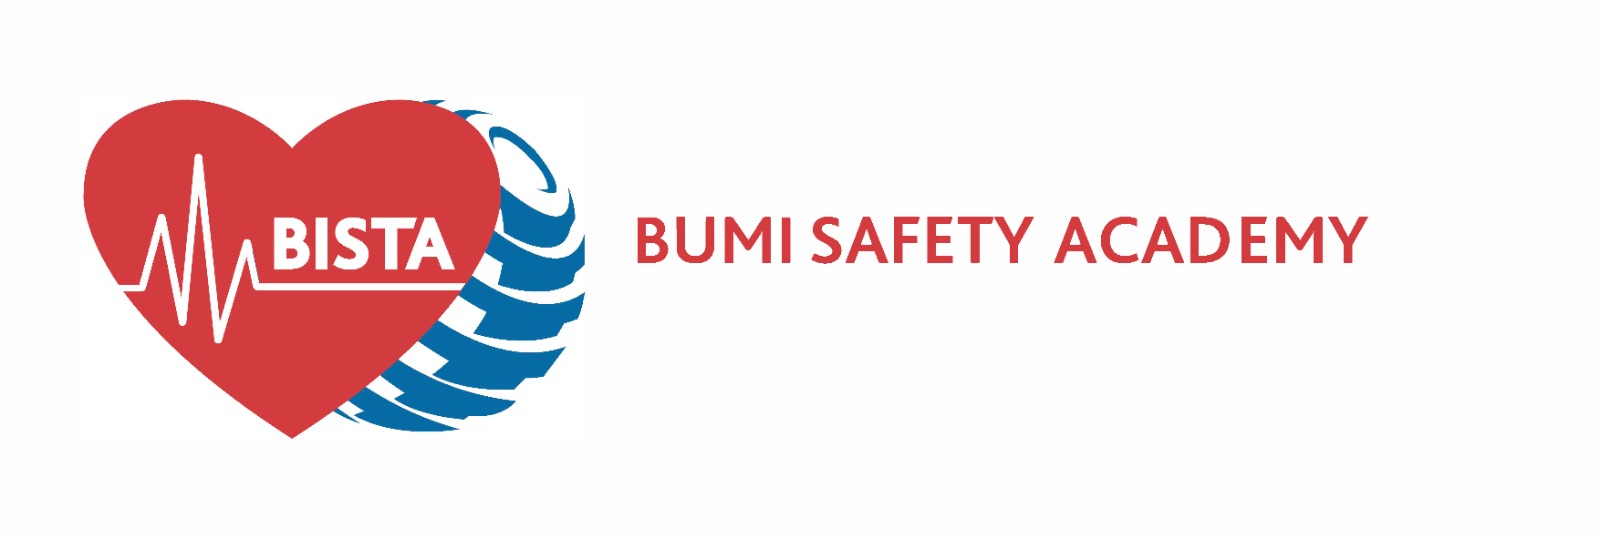 Bumi Safety Academy | Safety Training Academy Malaysia